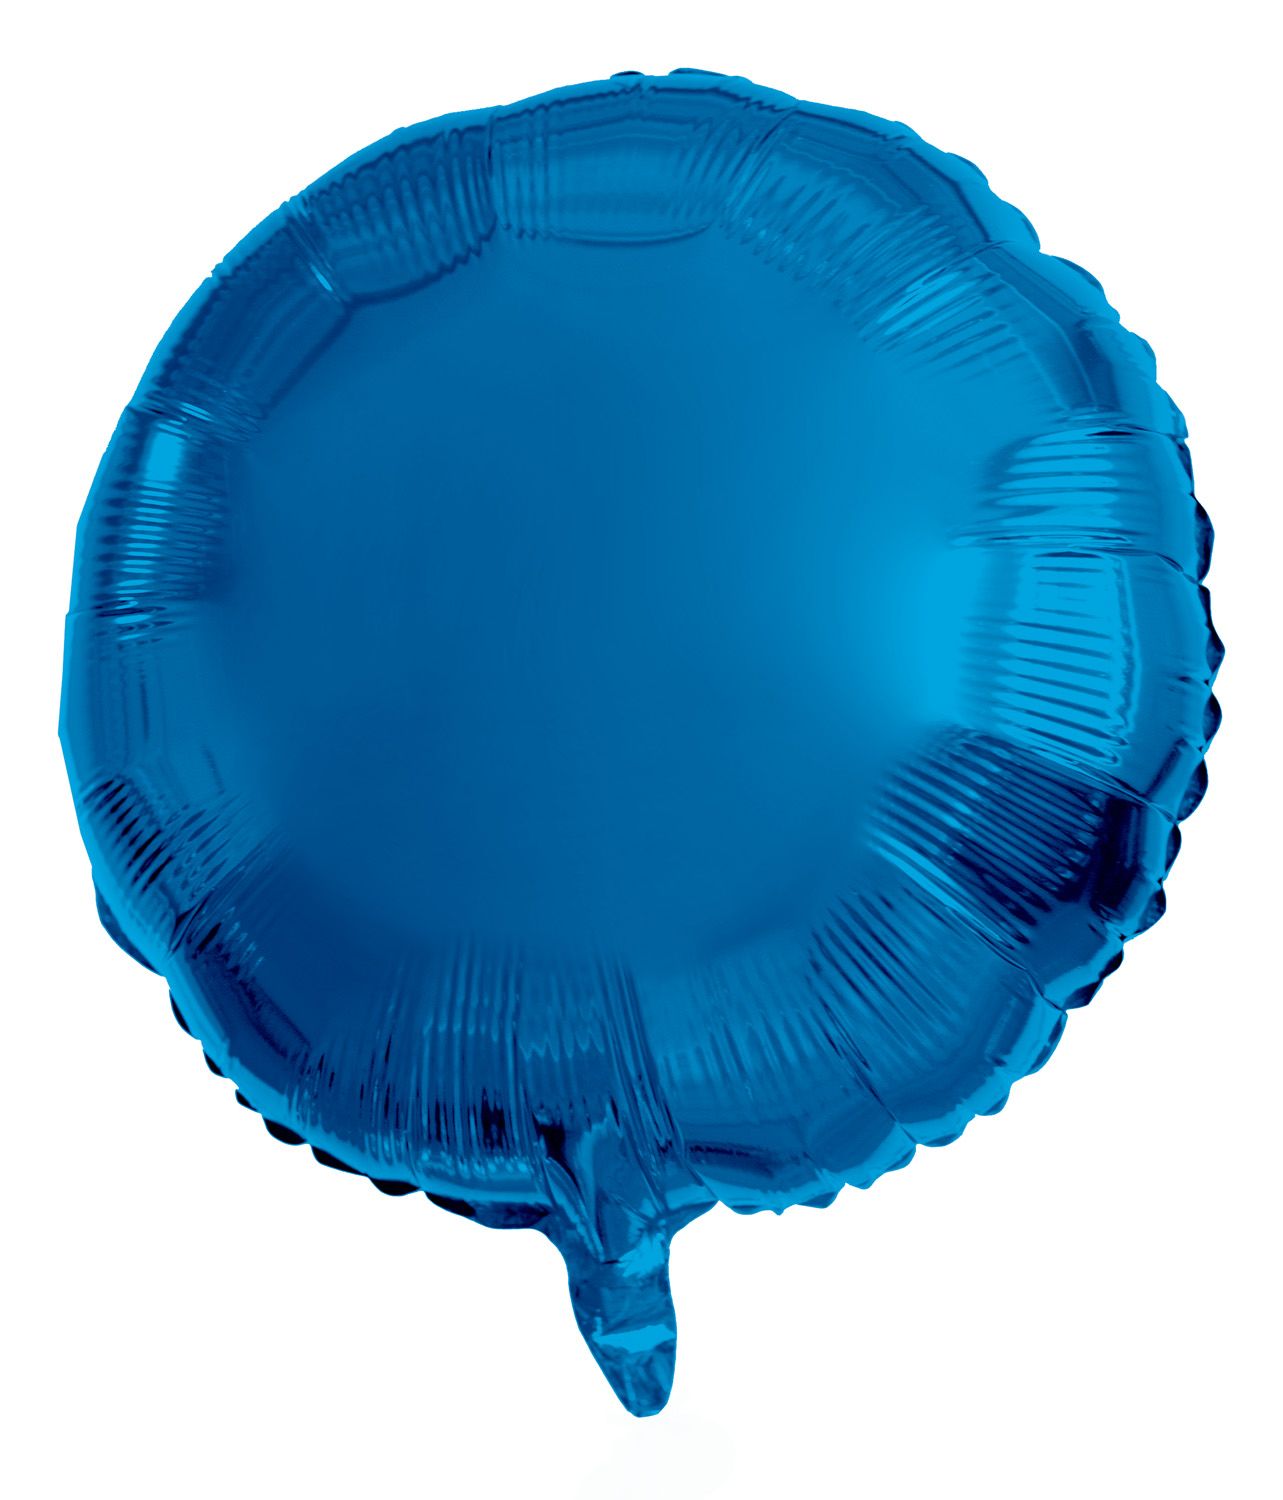 Ronde folieballon 45cm blauw